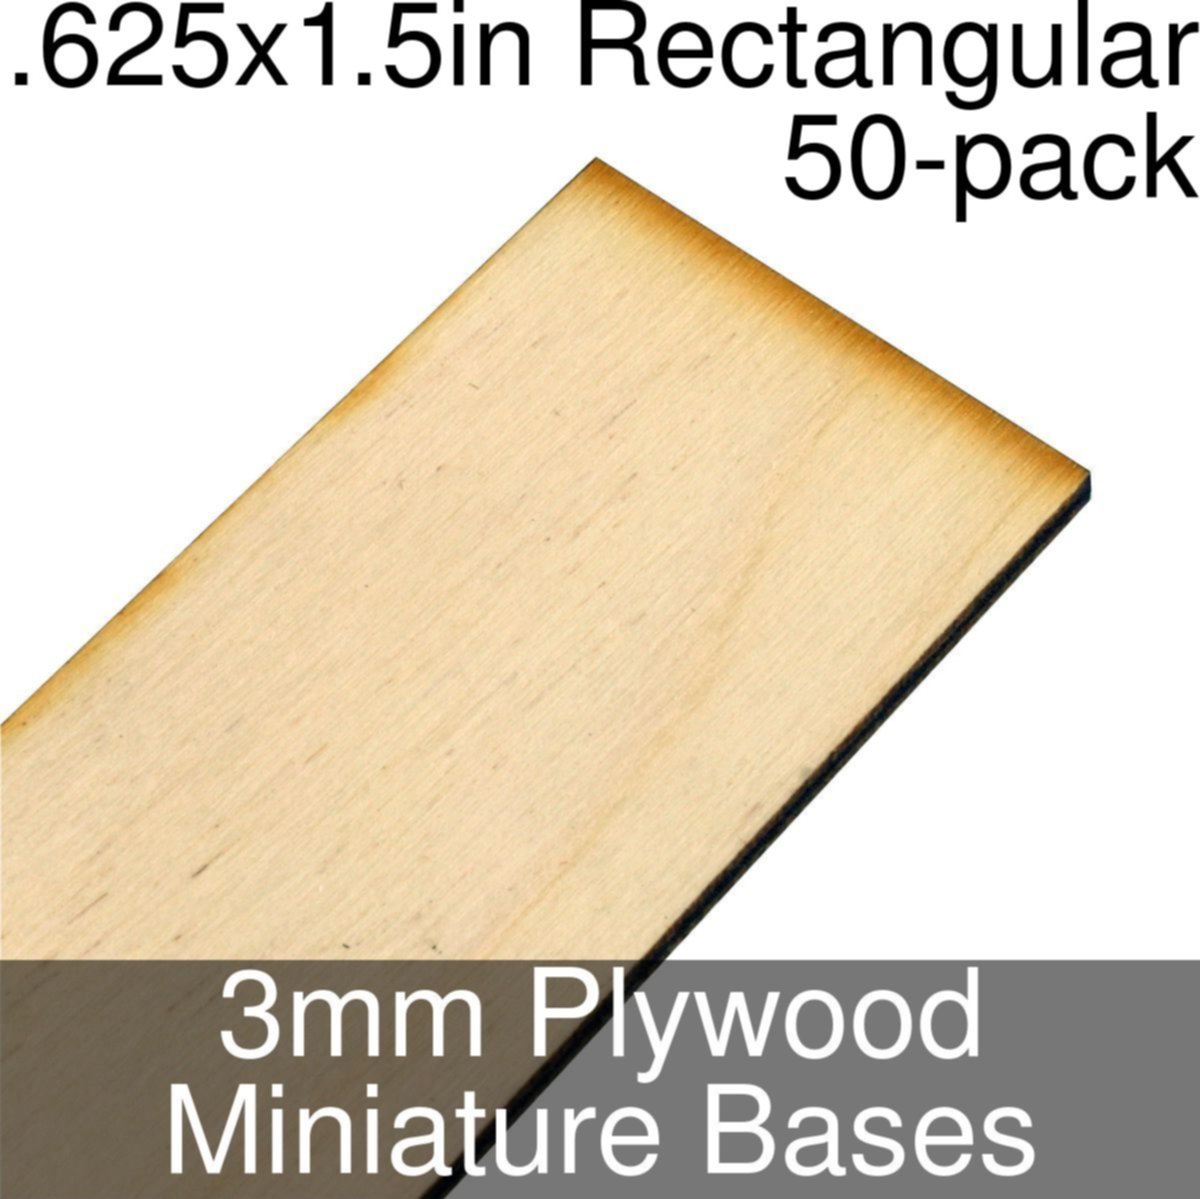 .625x1.5-inch rectangular miniature bases